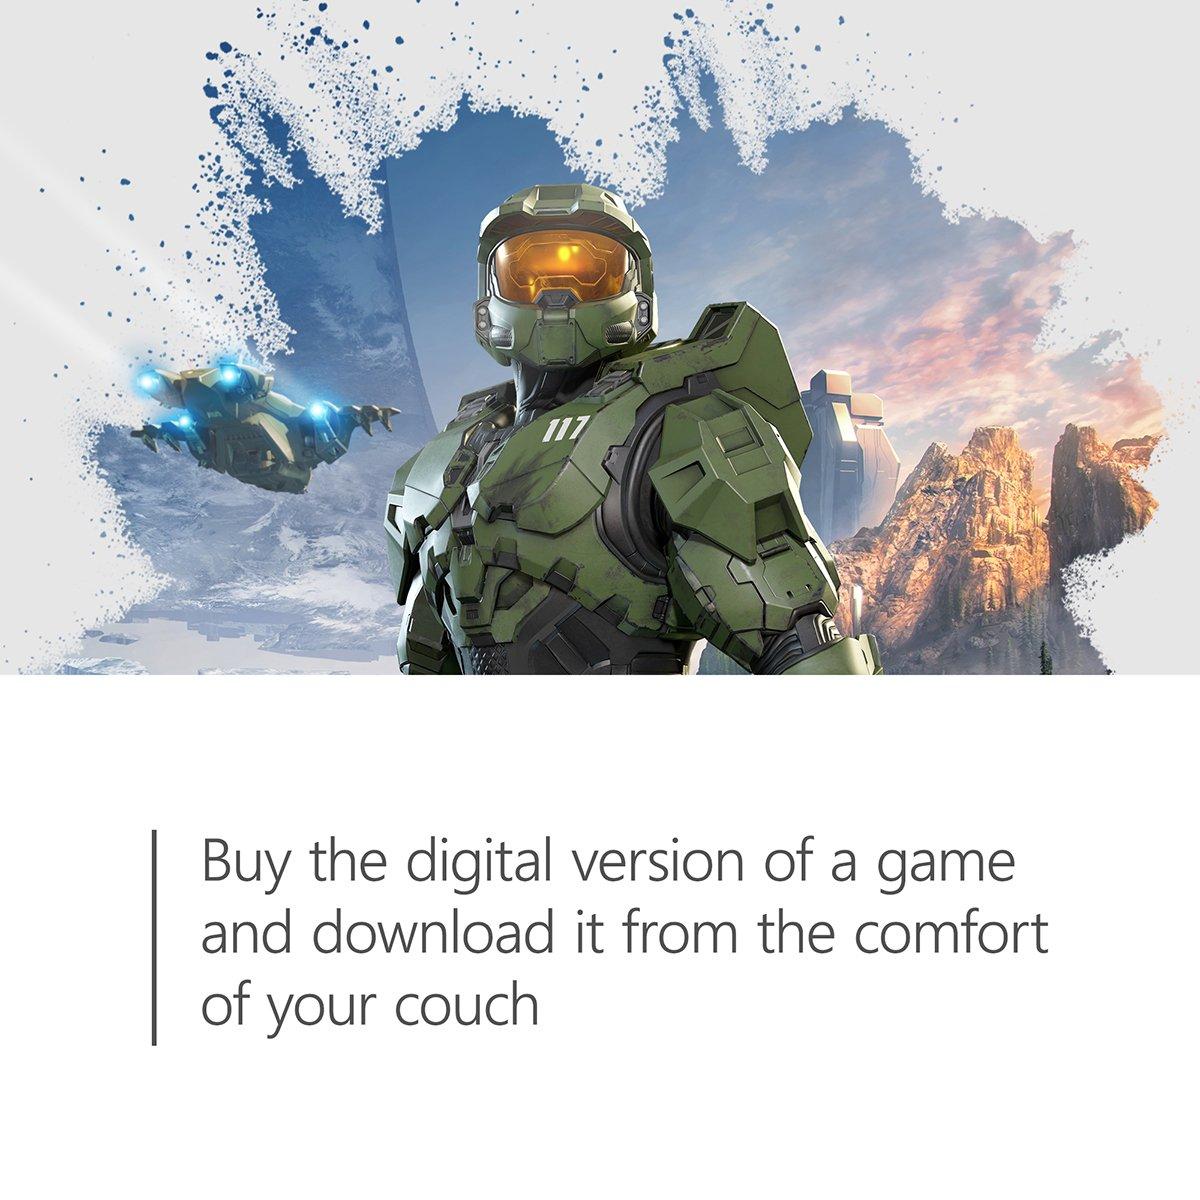 Microsoft Xbox gift card on a white background. – Stock Editorial Photo ©  dennizn #163757004